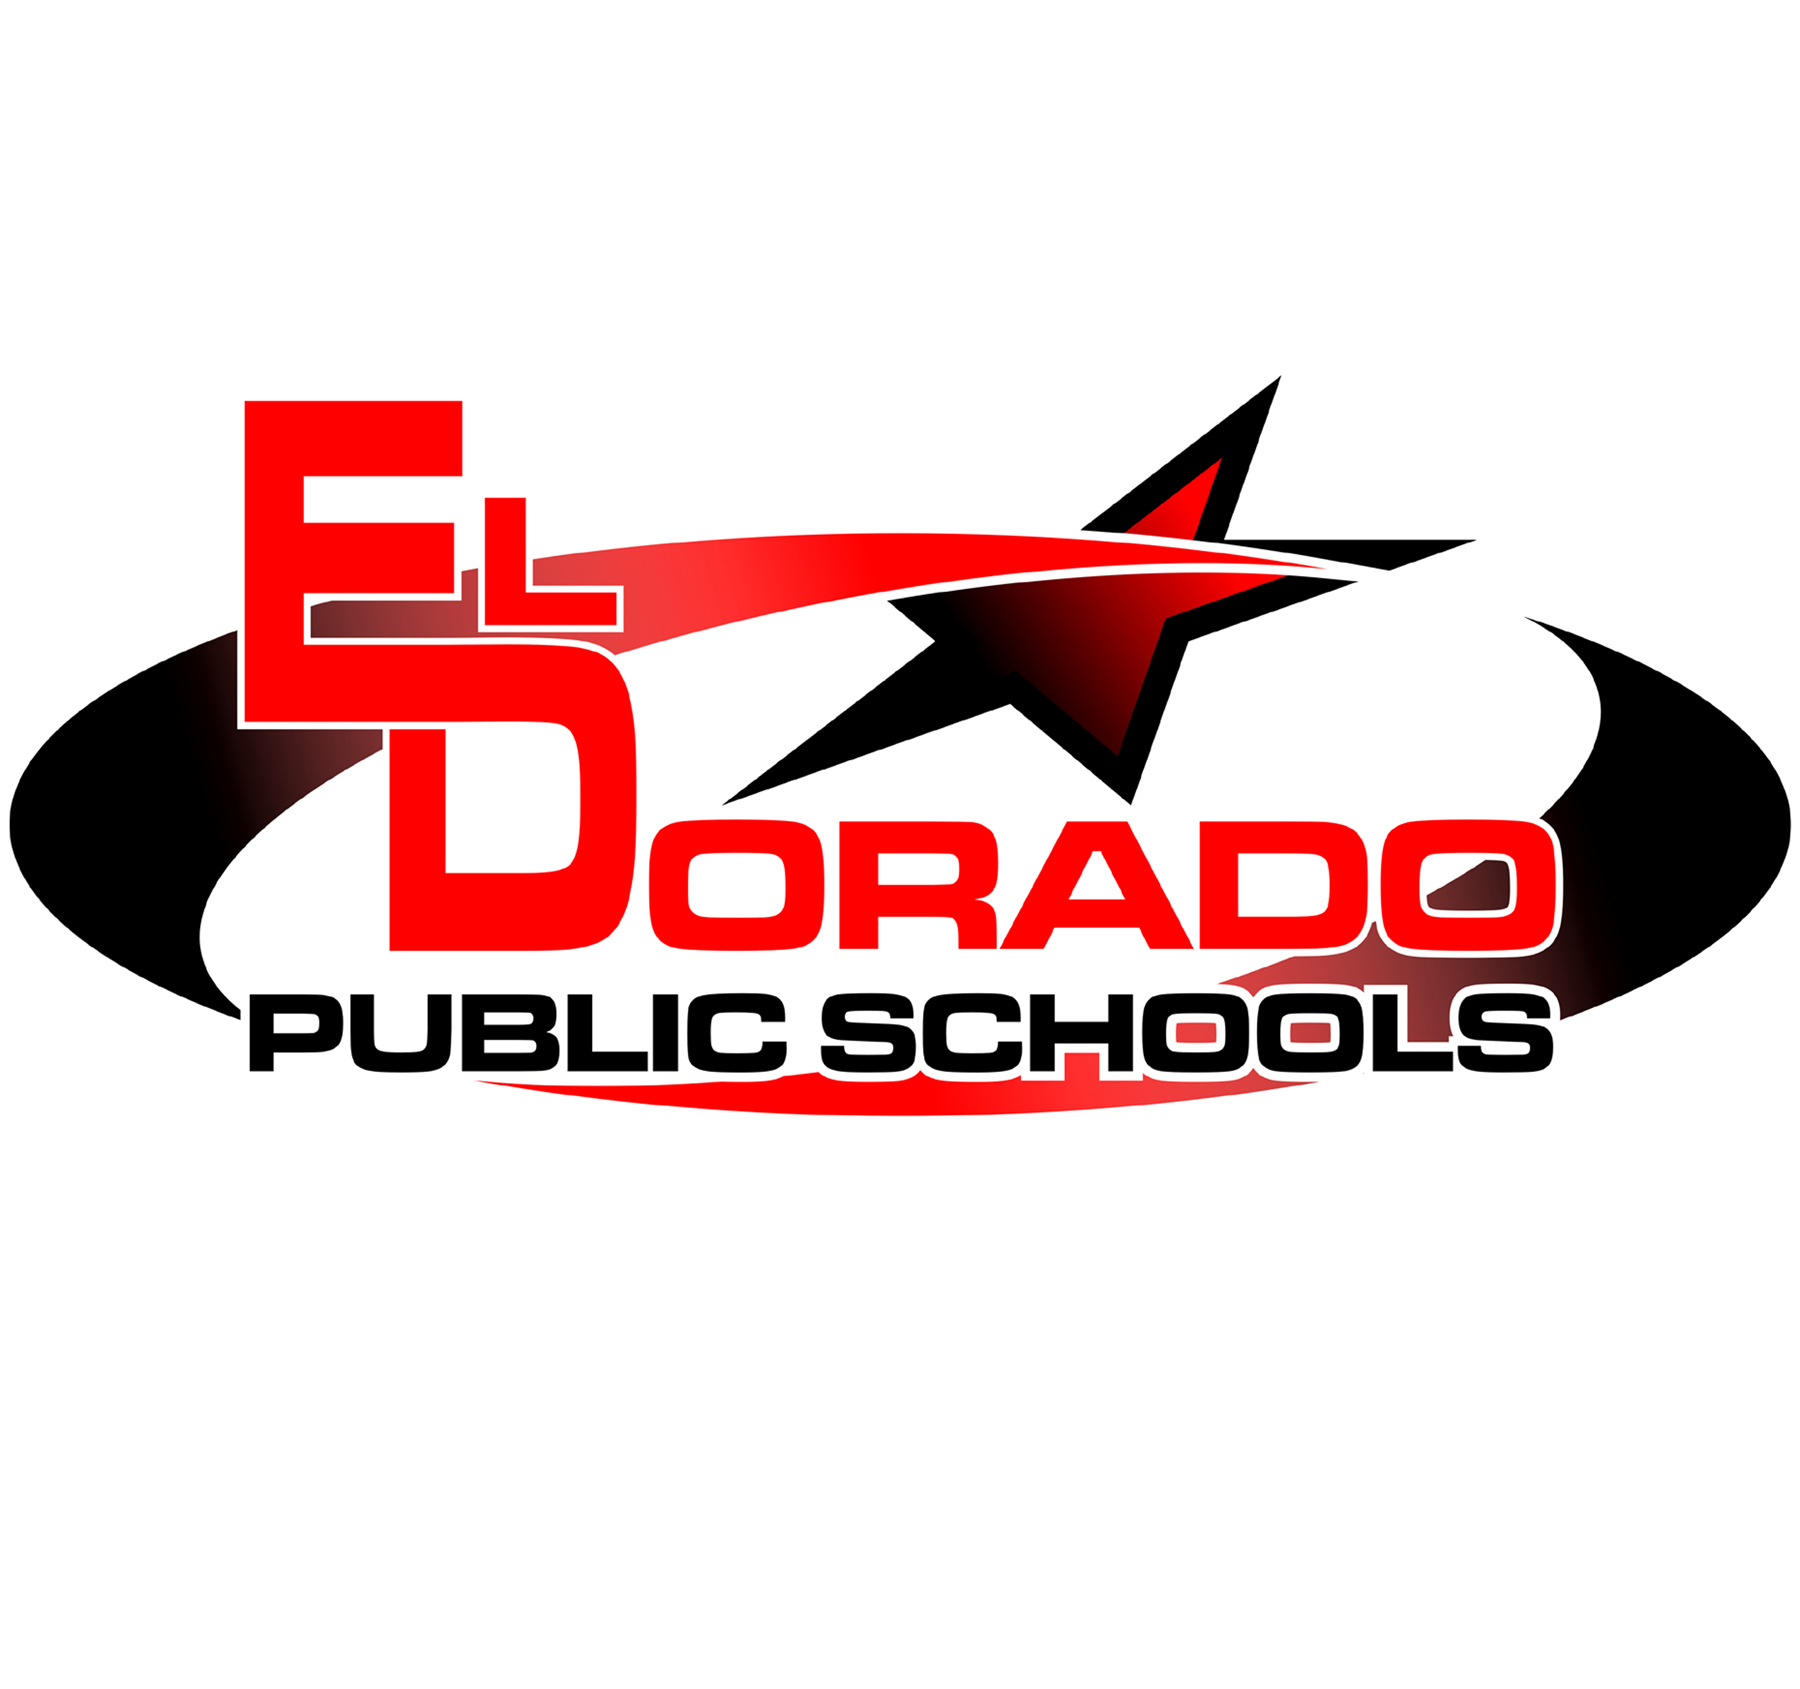 USD 490 logo - black oval with red "El Dorado" black "Public Schools" and a red/black star at the top